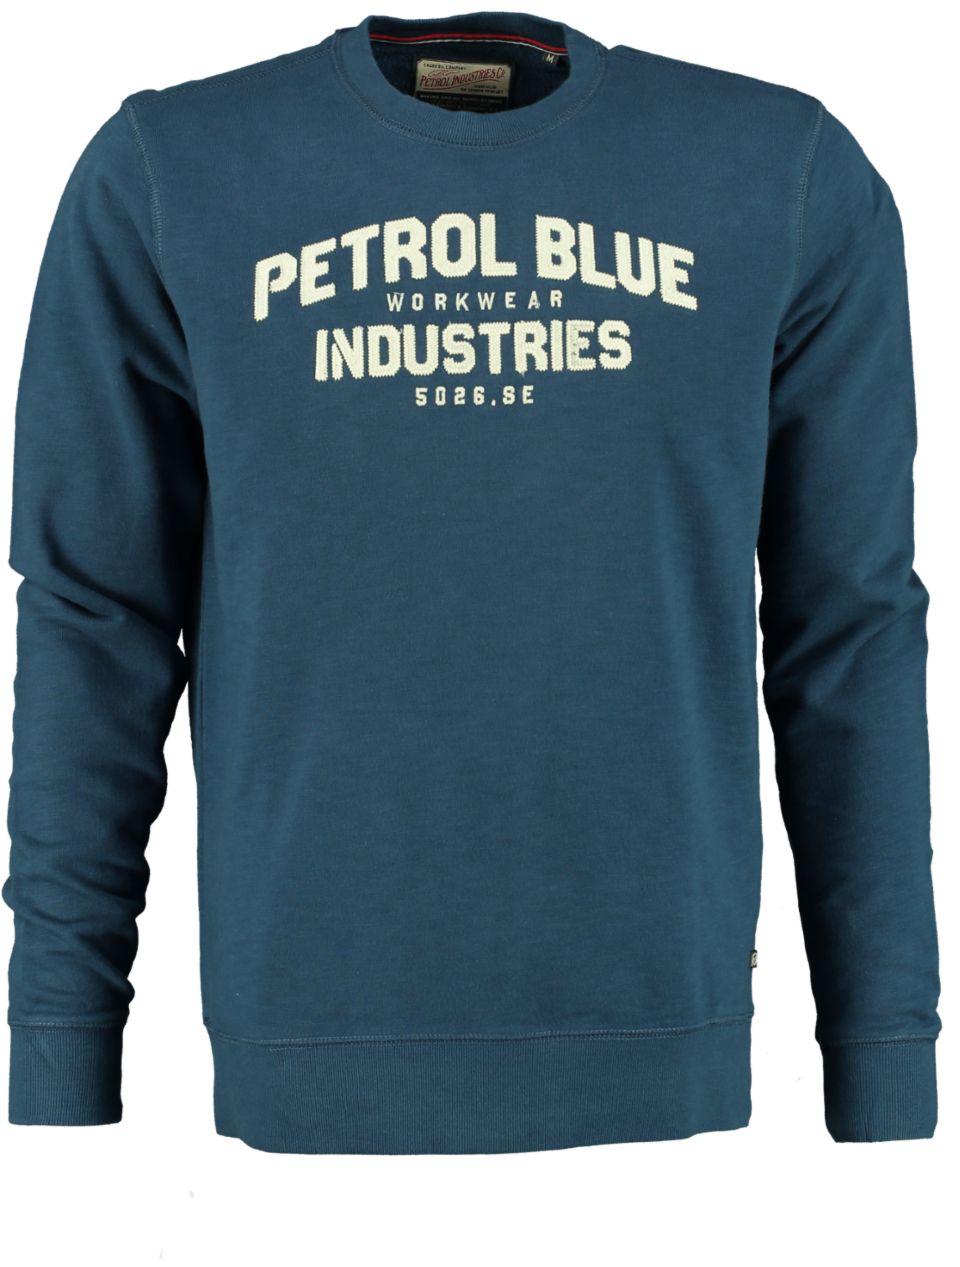 Petrol Sweater 